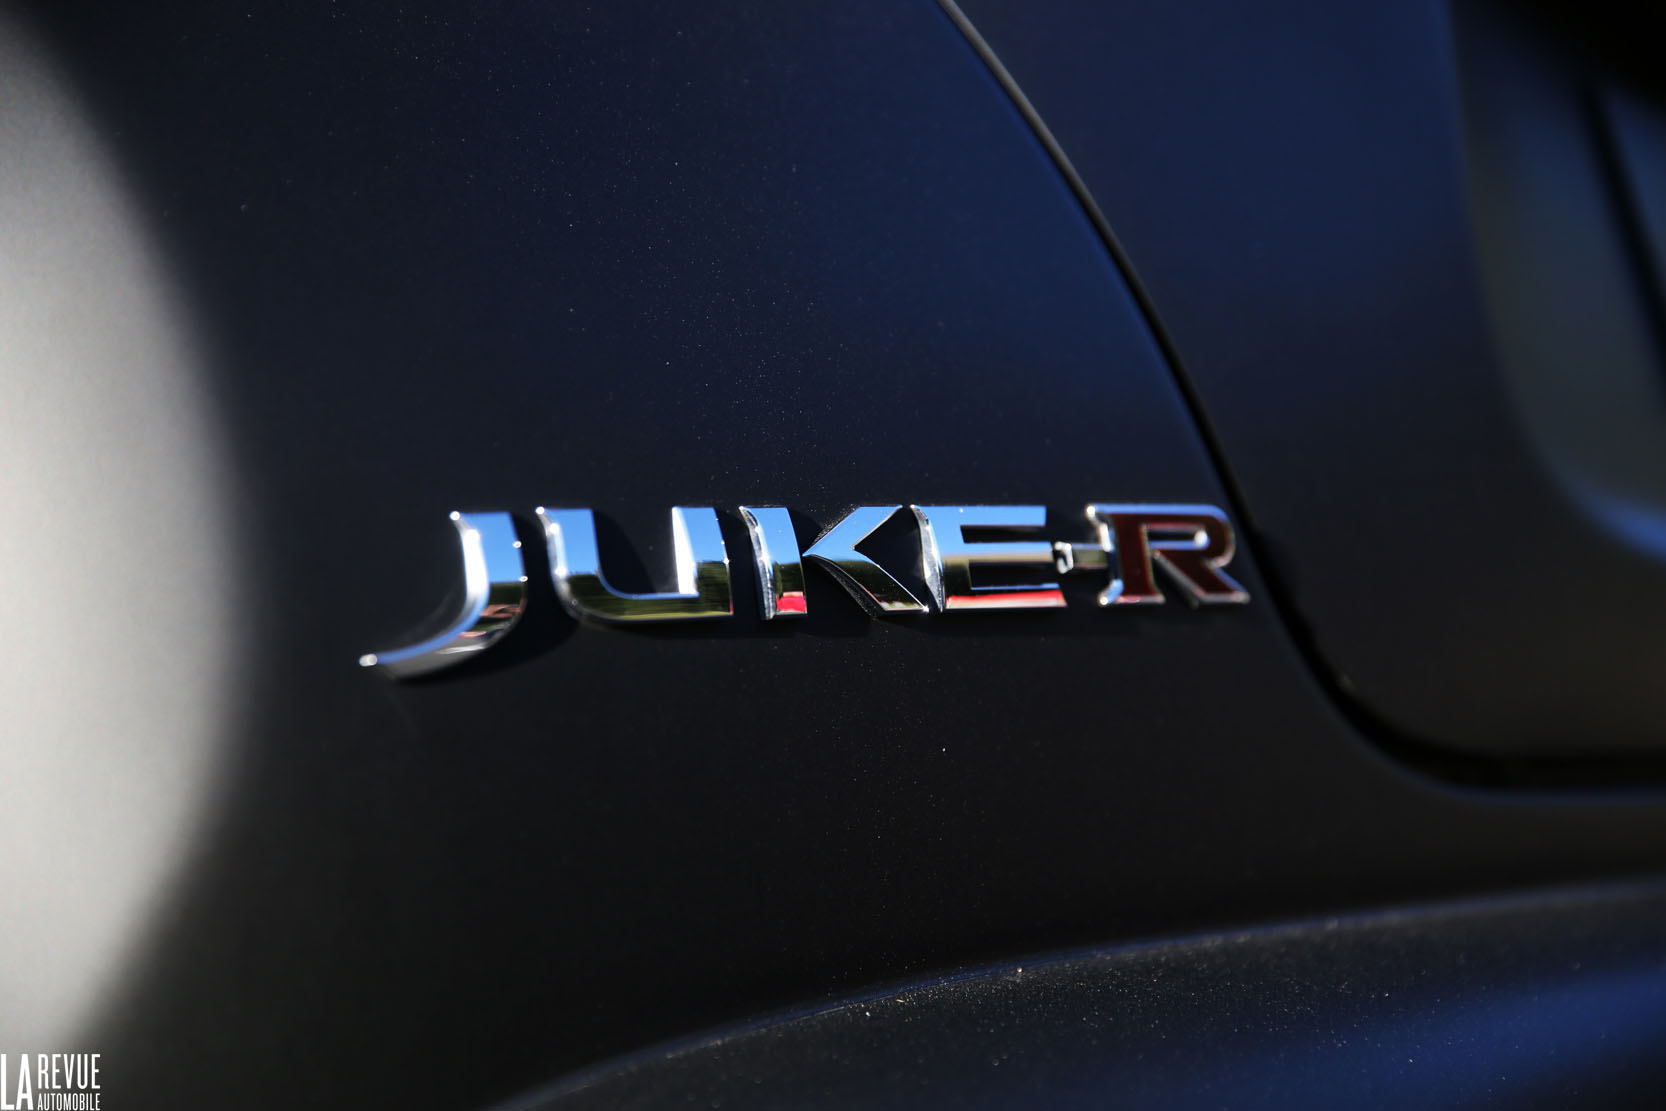 Exterieur_Nissan-Juke-R-2.0-Megeve_12